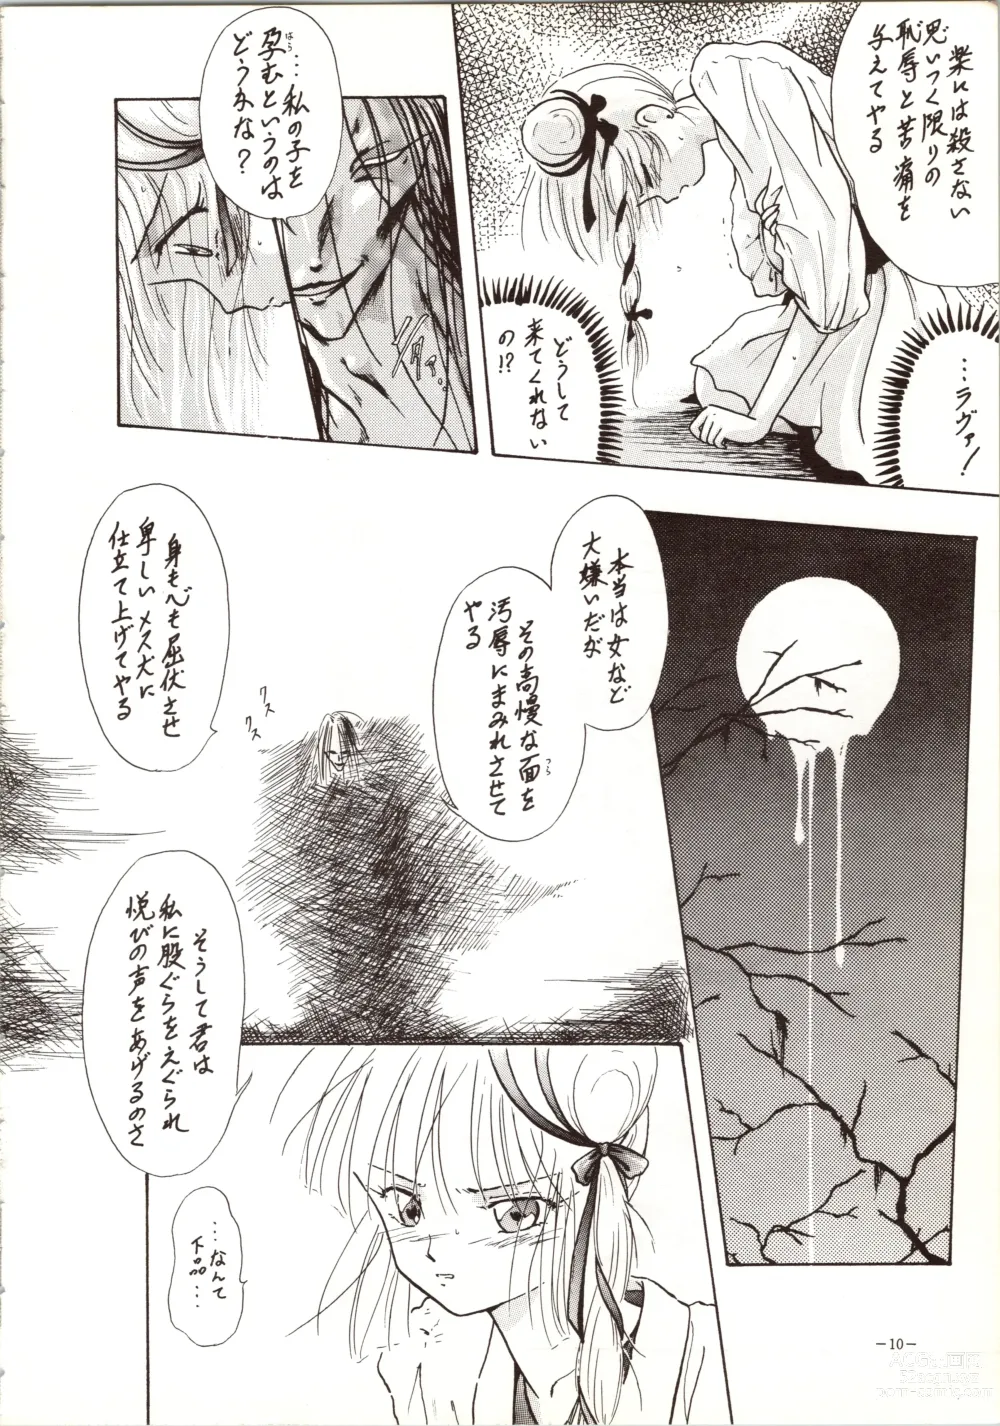 Page 10 of doujinshi MODEL 5